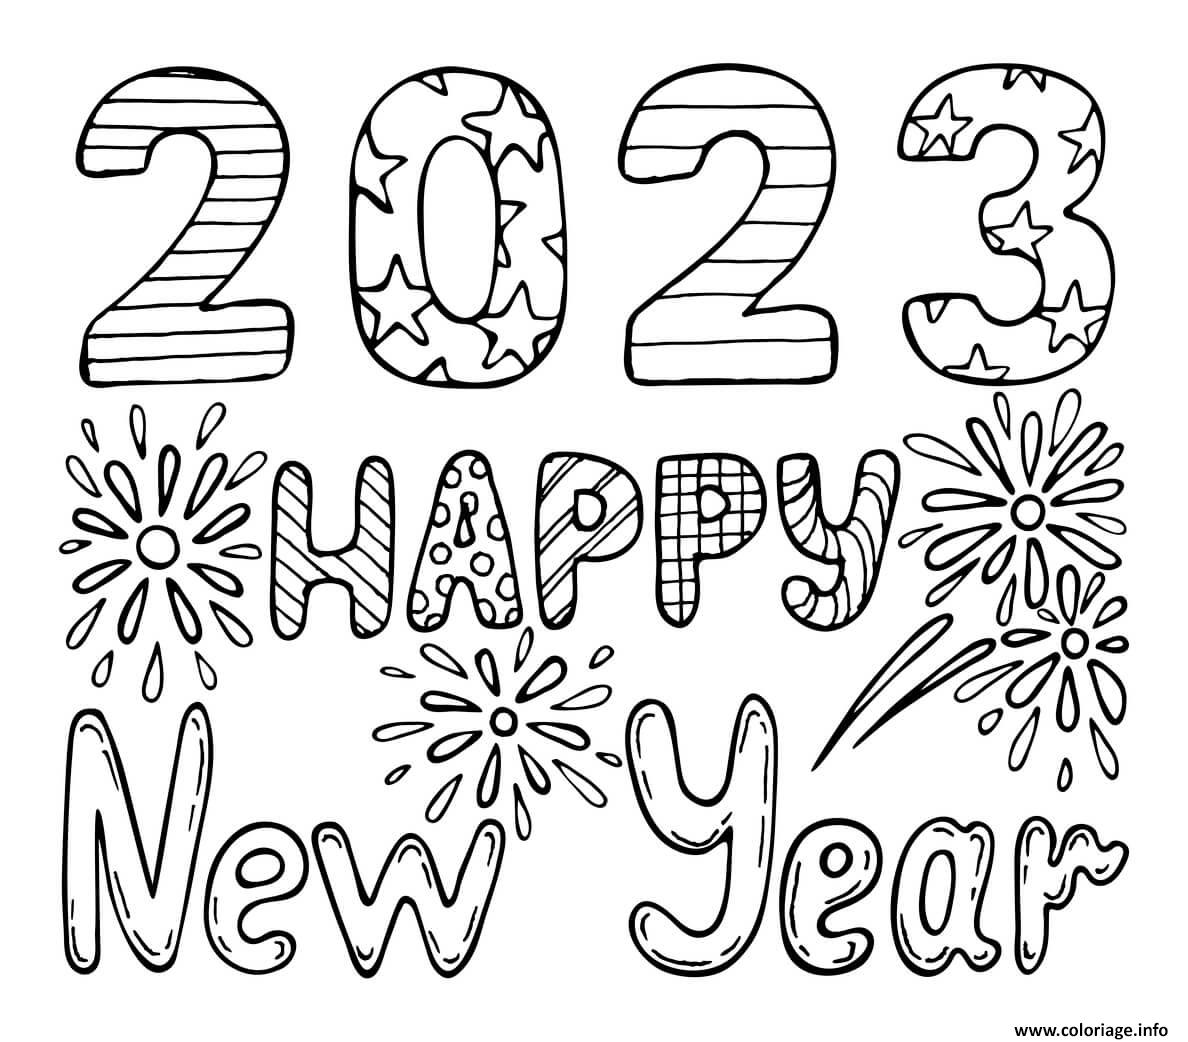 Dessin 2023 happy new year stars Coloriage Gratuit à Imprimer